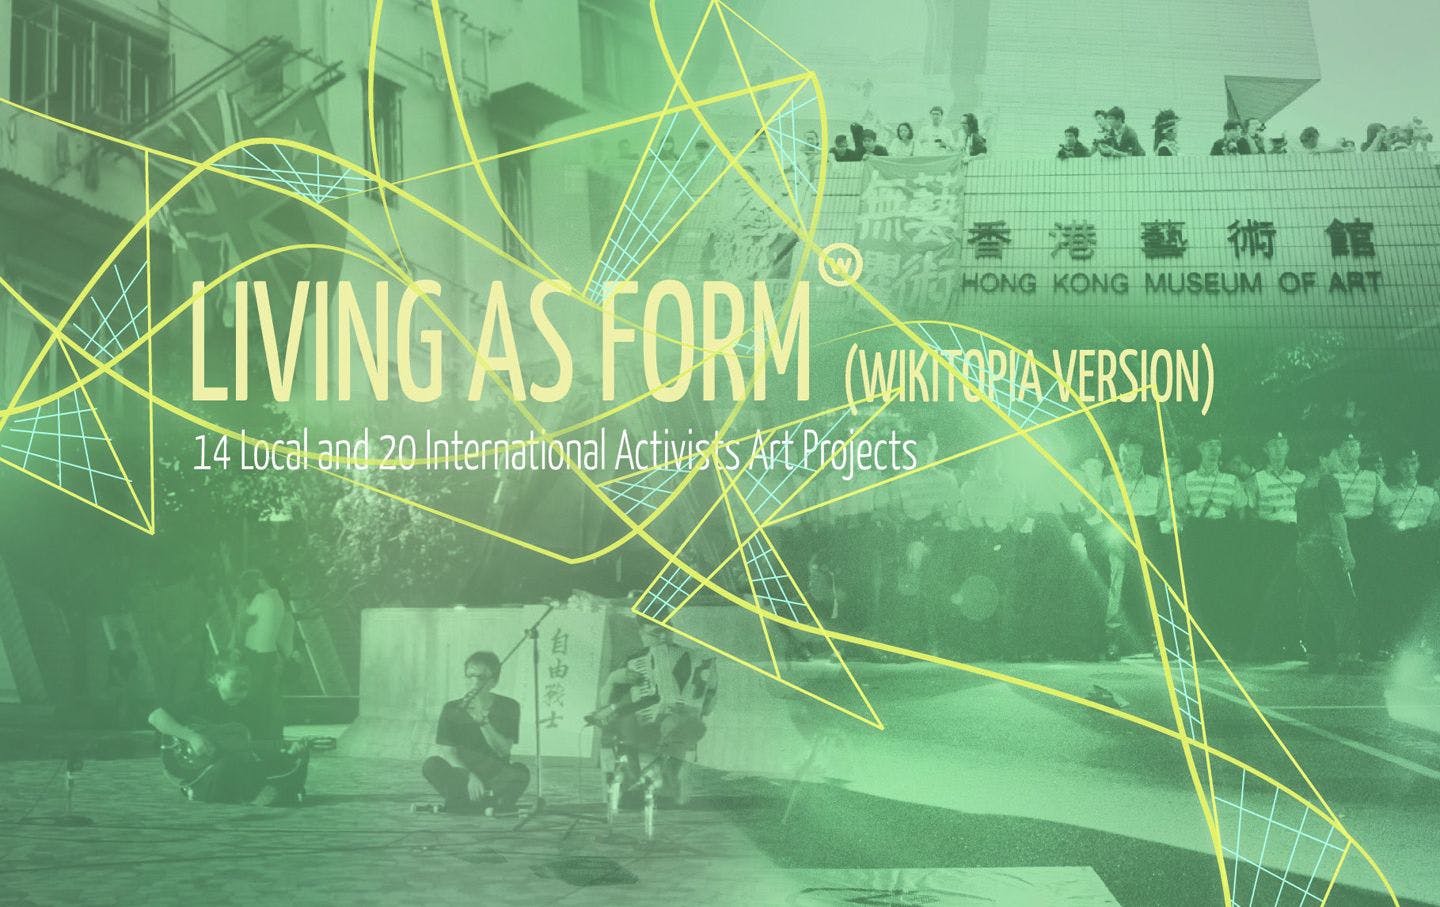 Living as Form (Wikitopia Version) – Postcard 式者生存-維基托邦版（遊牧版）- 明信片